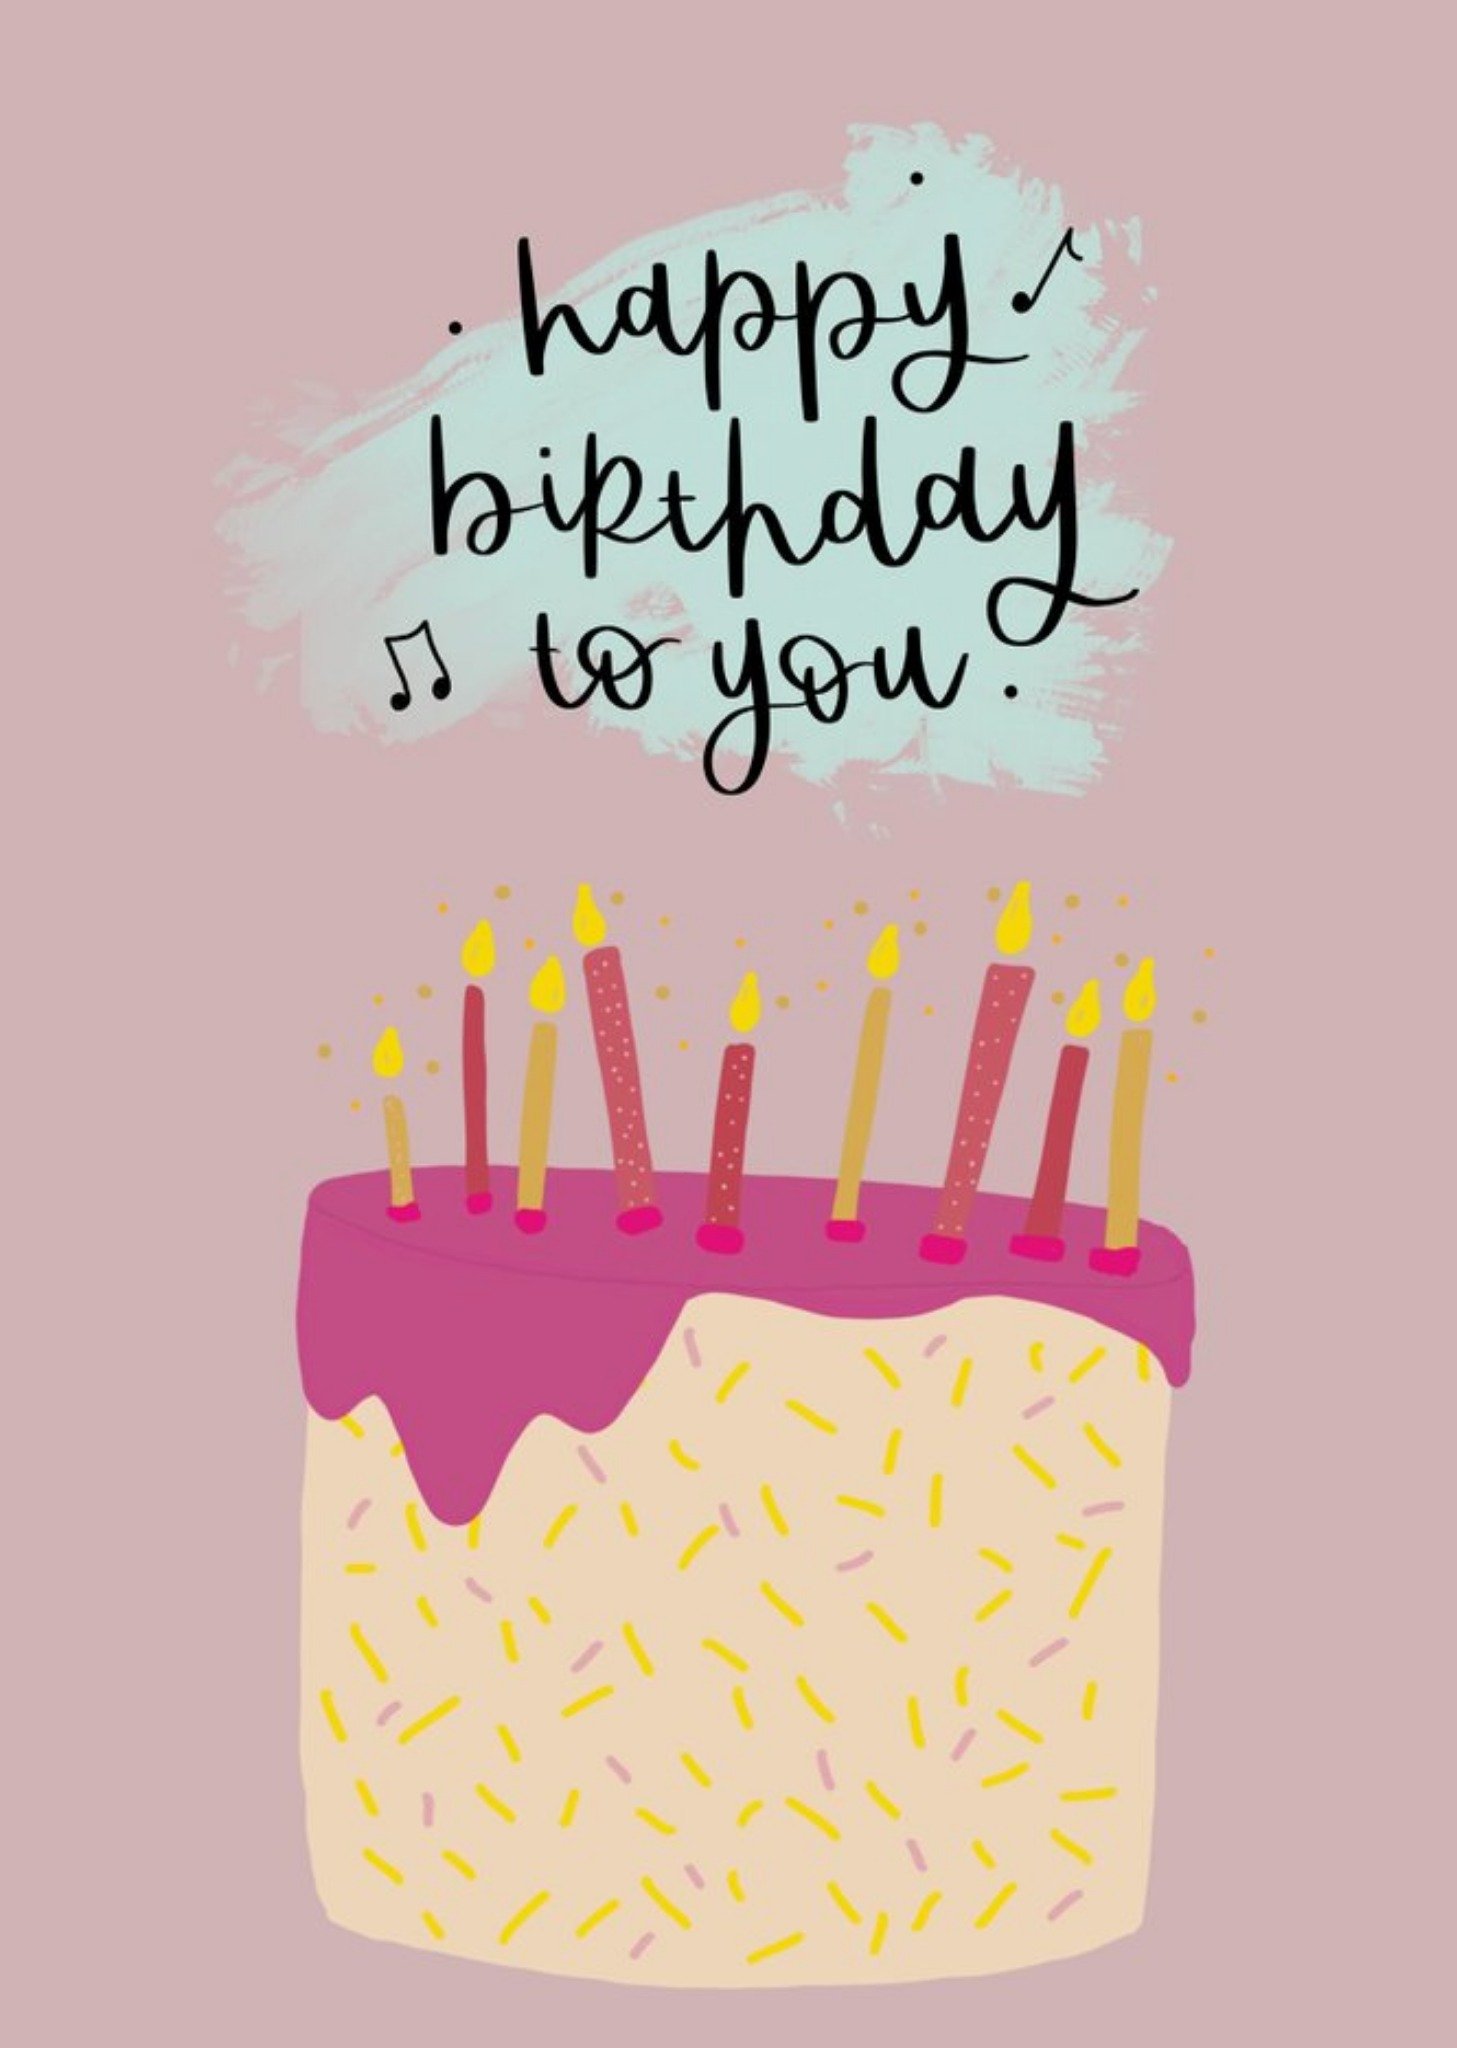 Friends The Lyons Den Illustration Pink Cake Food Grandma Birthday Card, Large